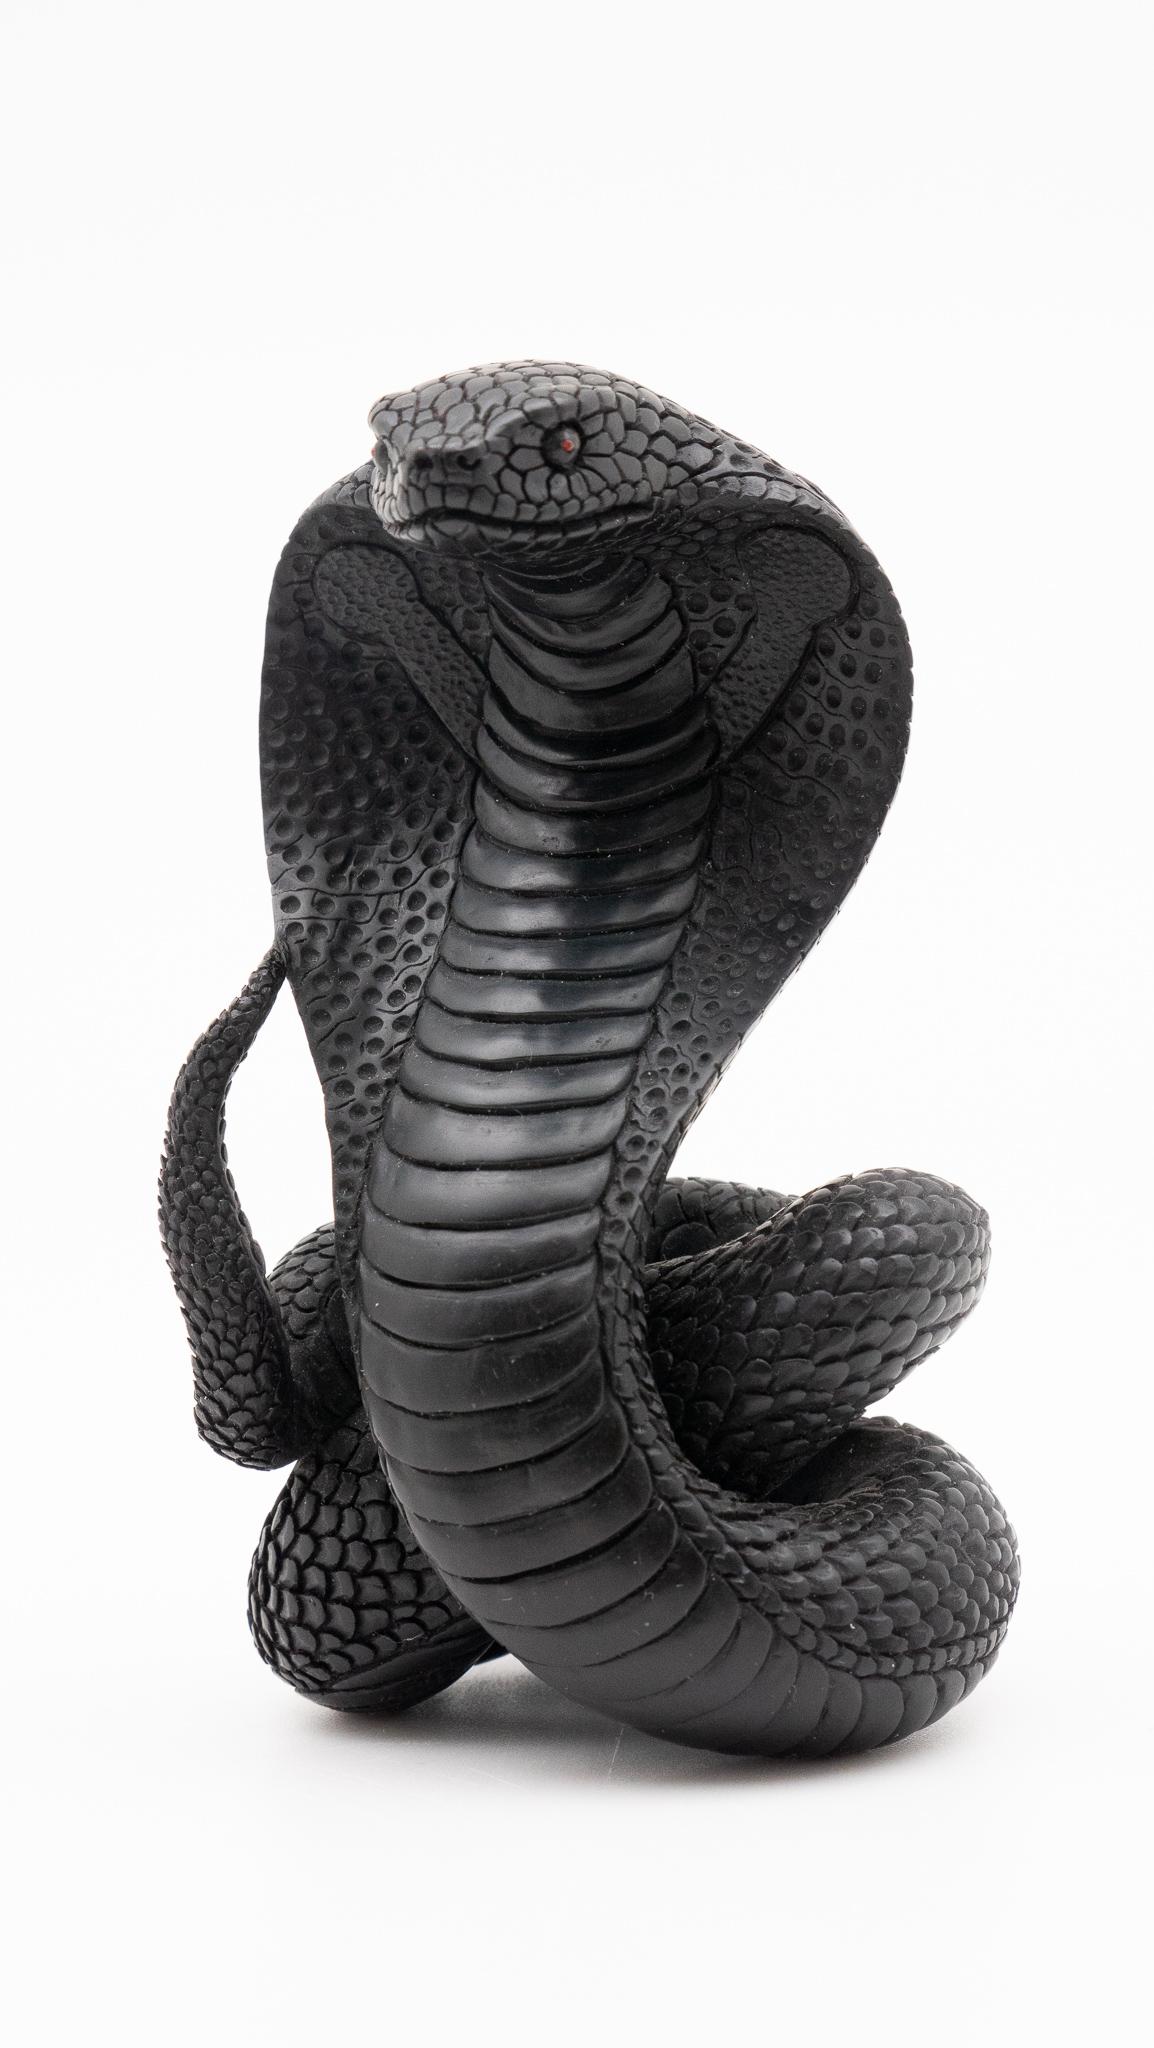 black cobra